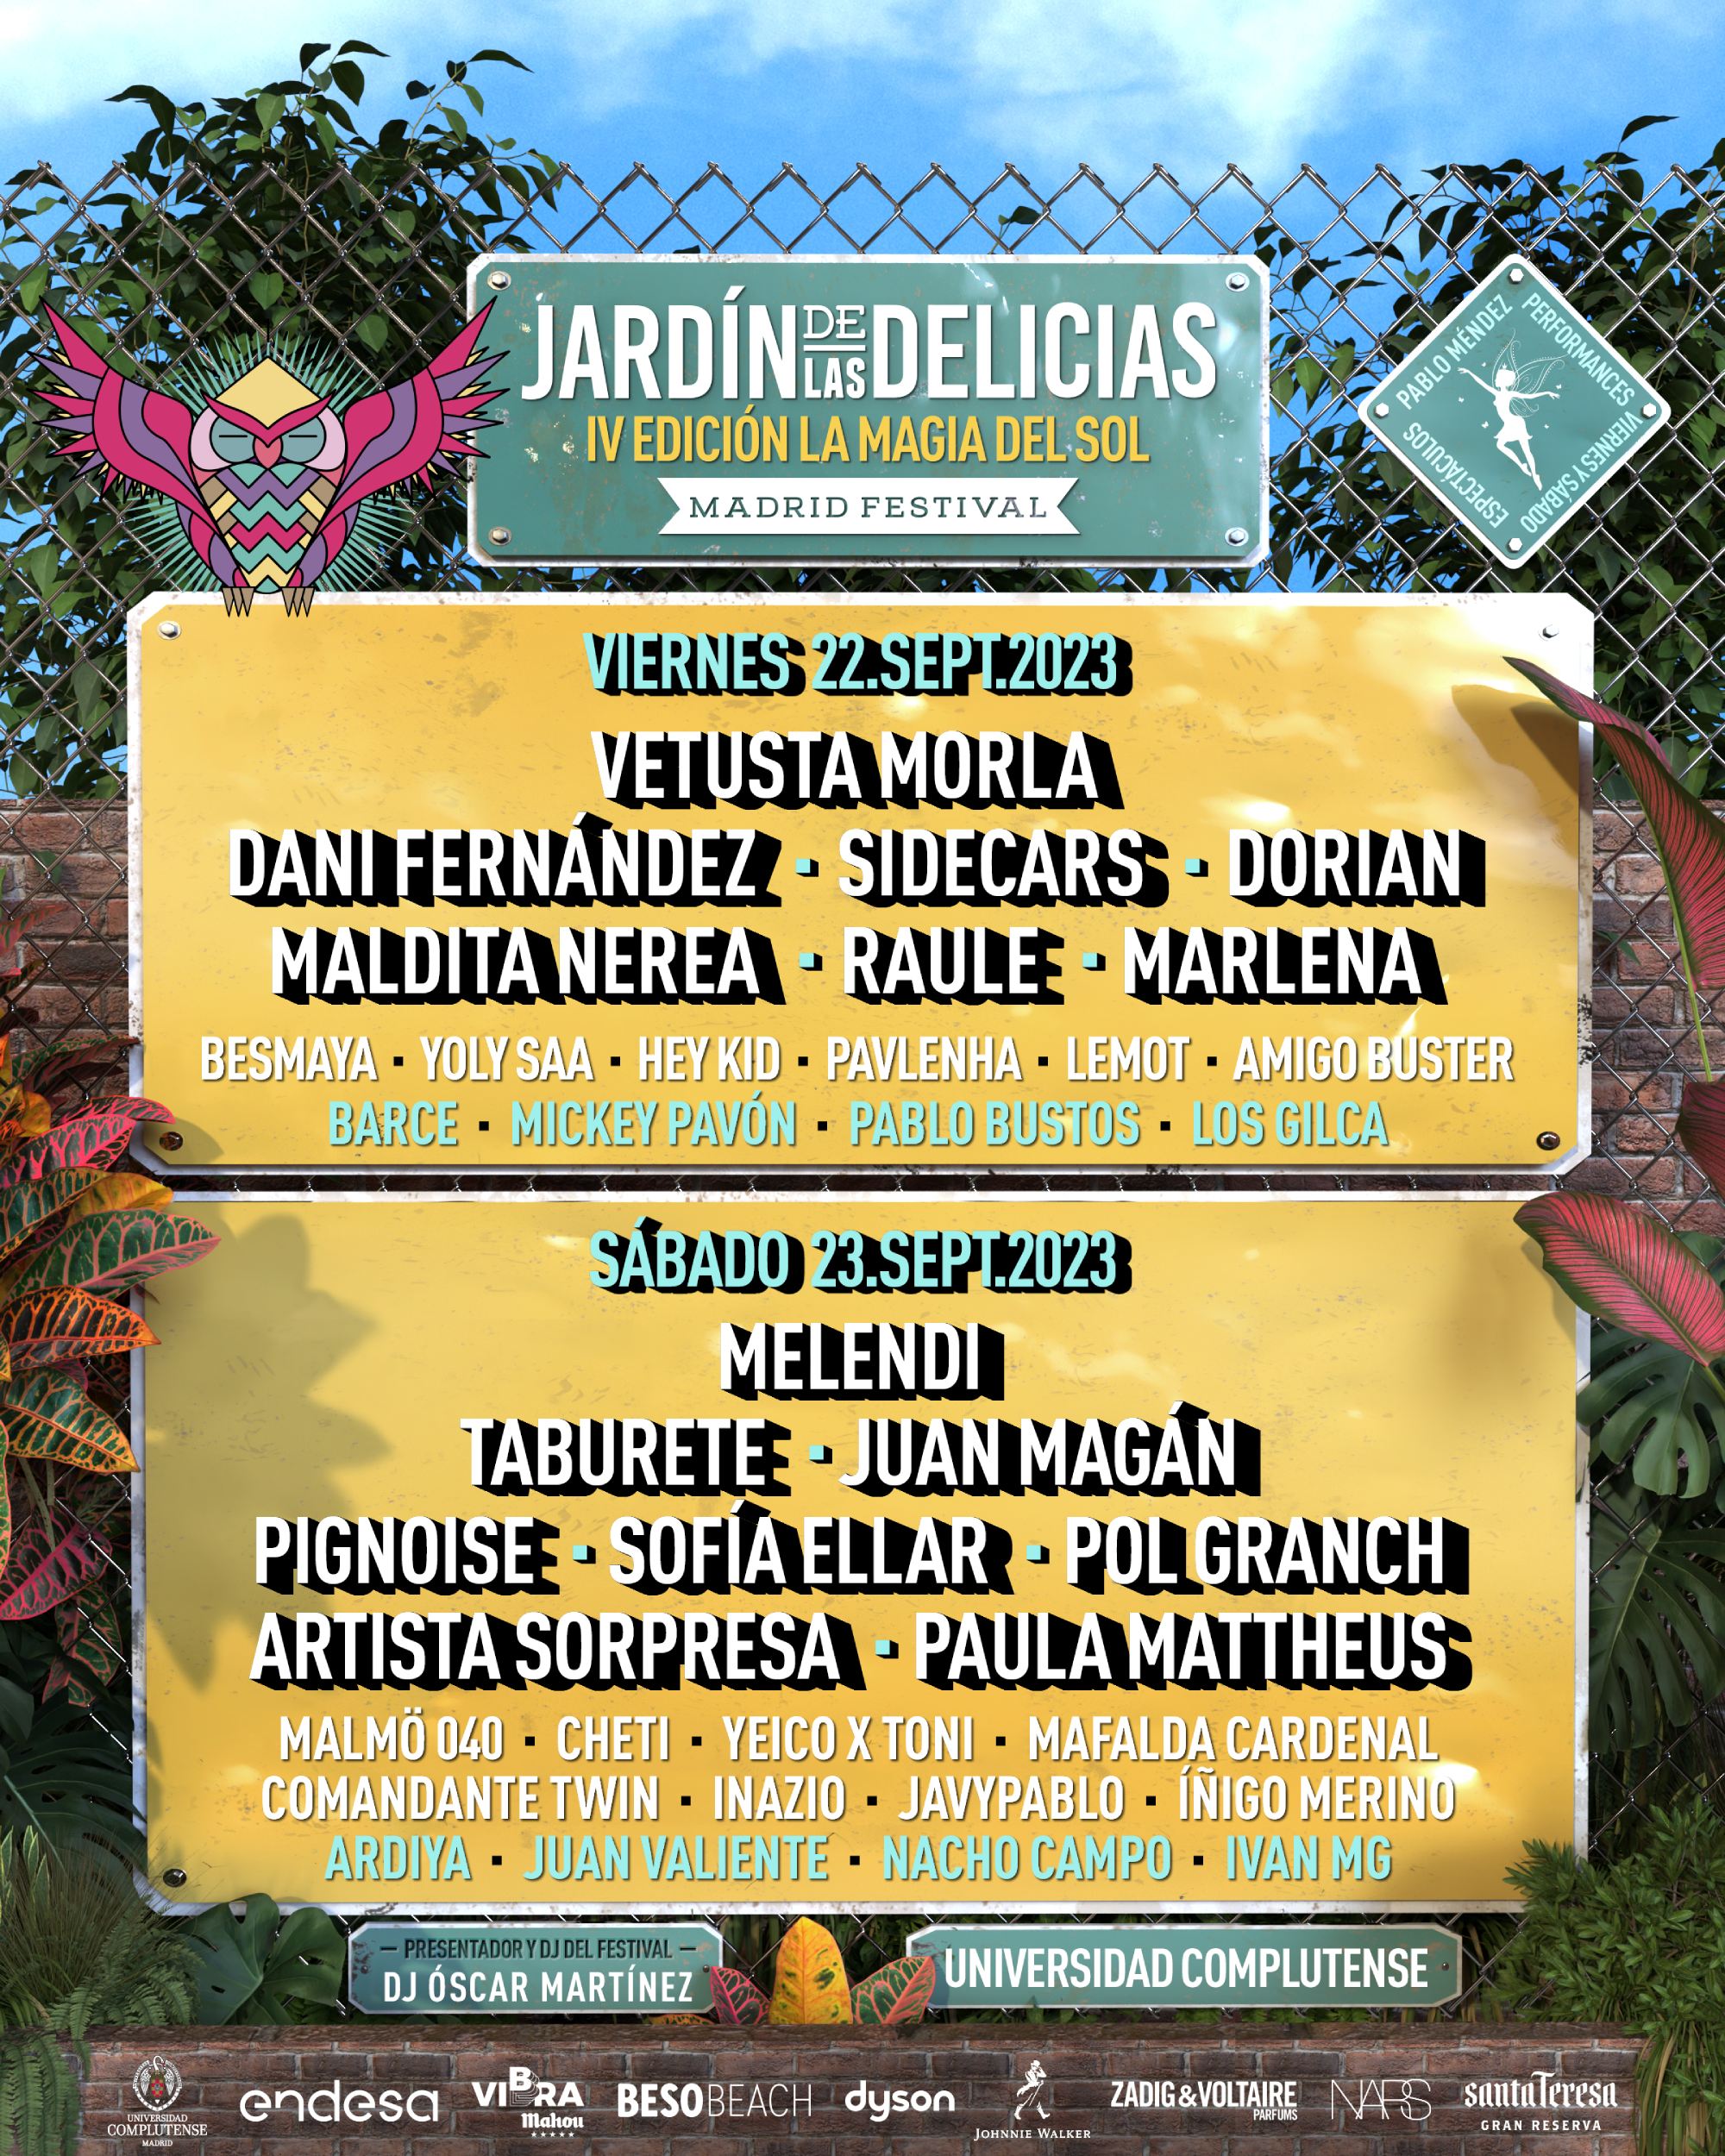 jardin-de-las-delicias-madrid-festival-2023-64d3a3e42cde38.67189720.jpeg